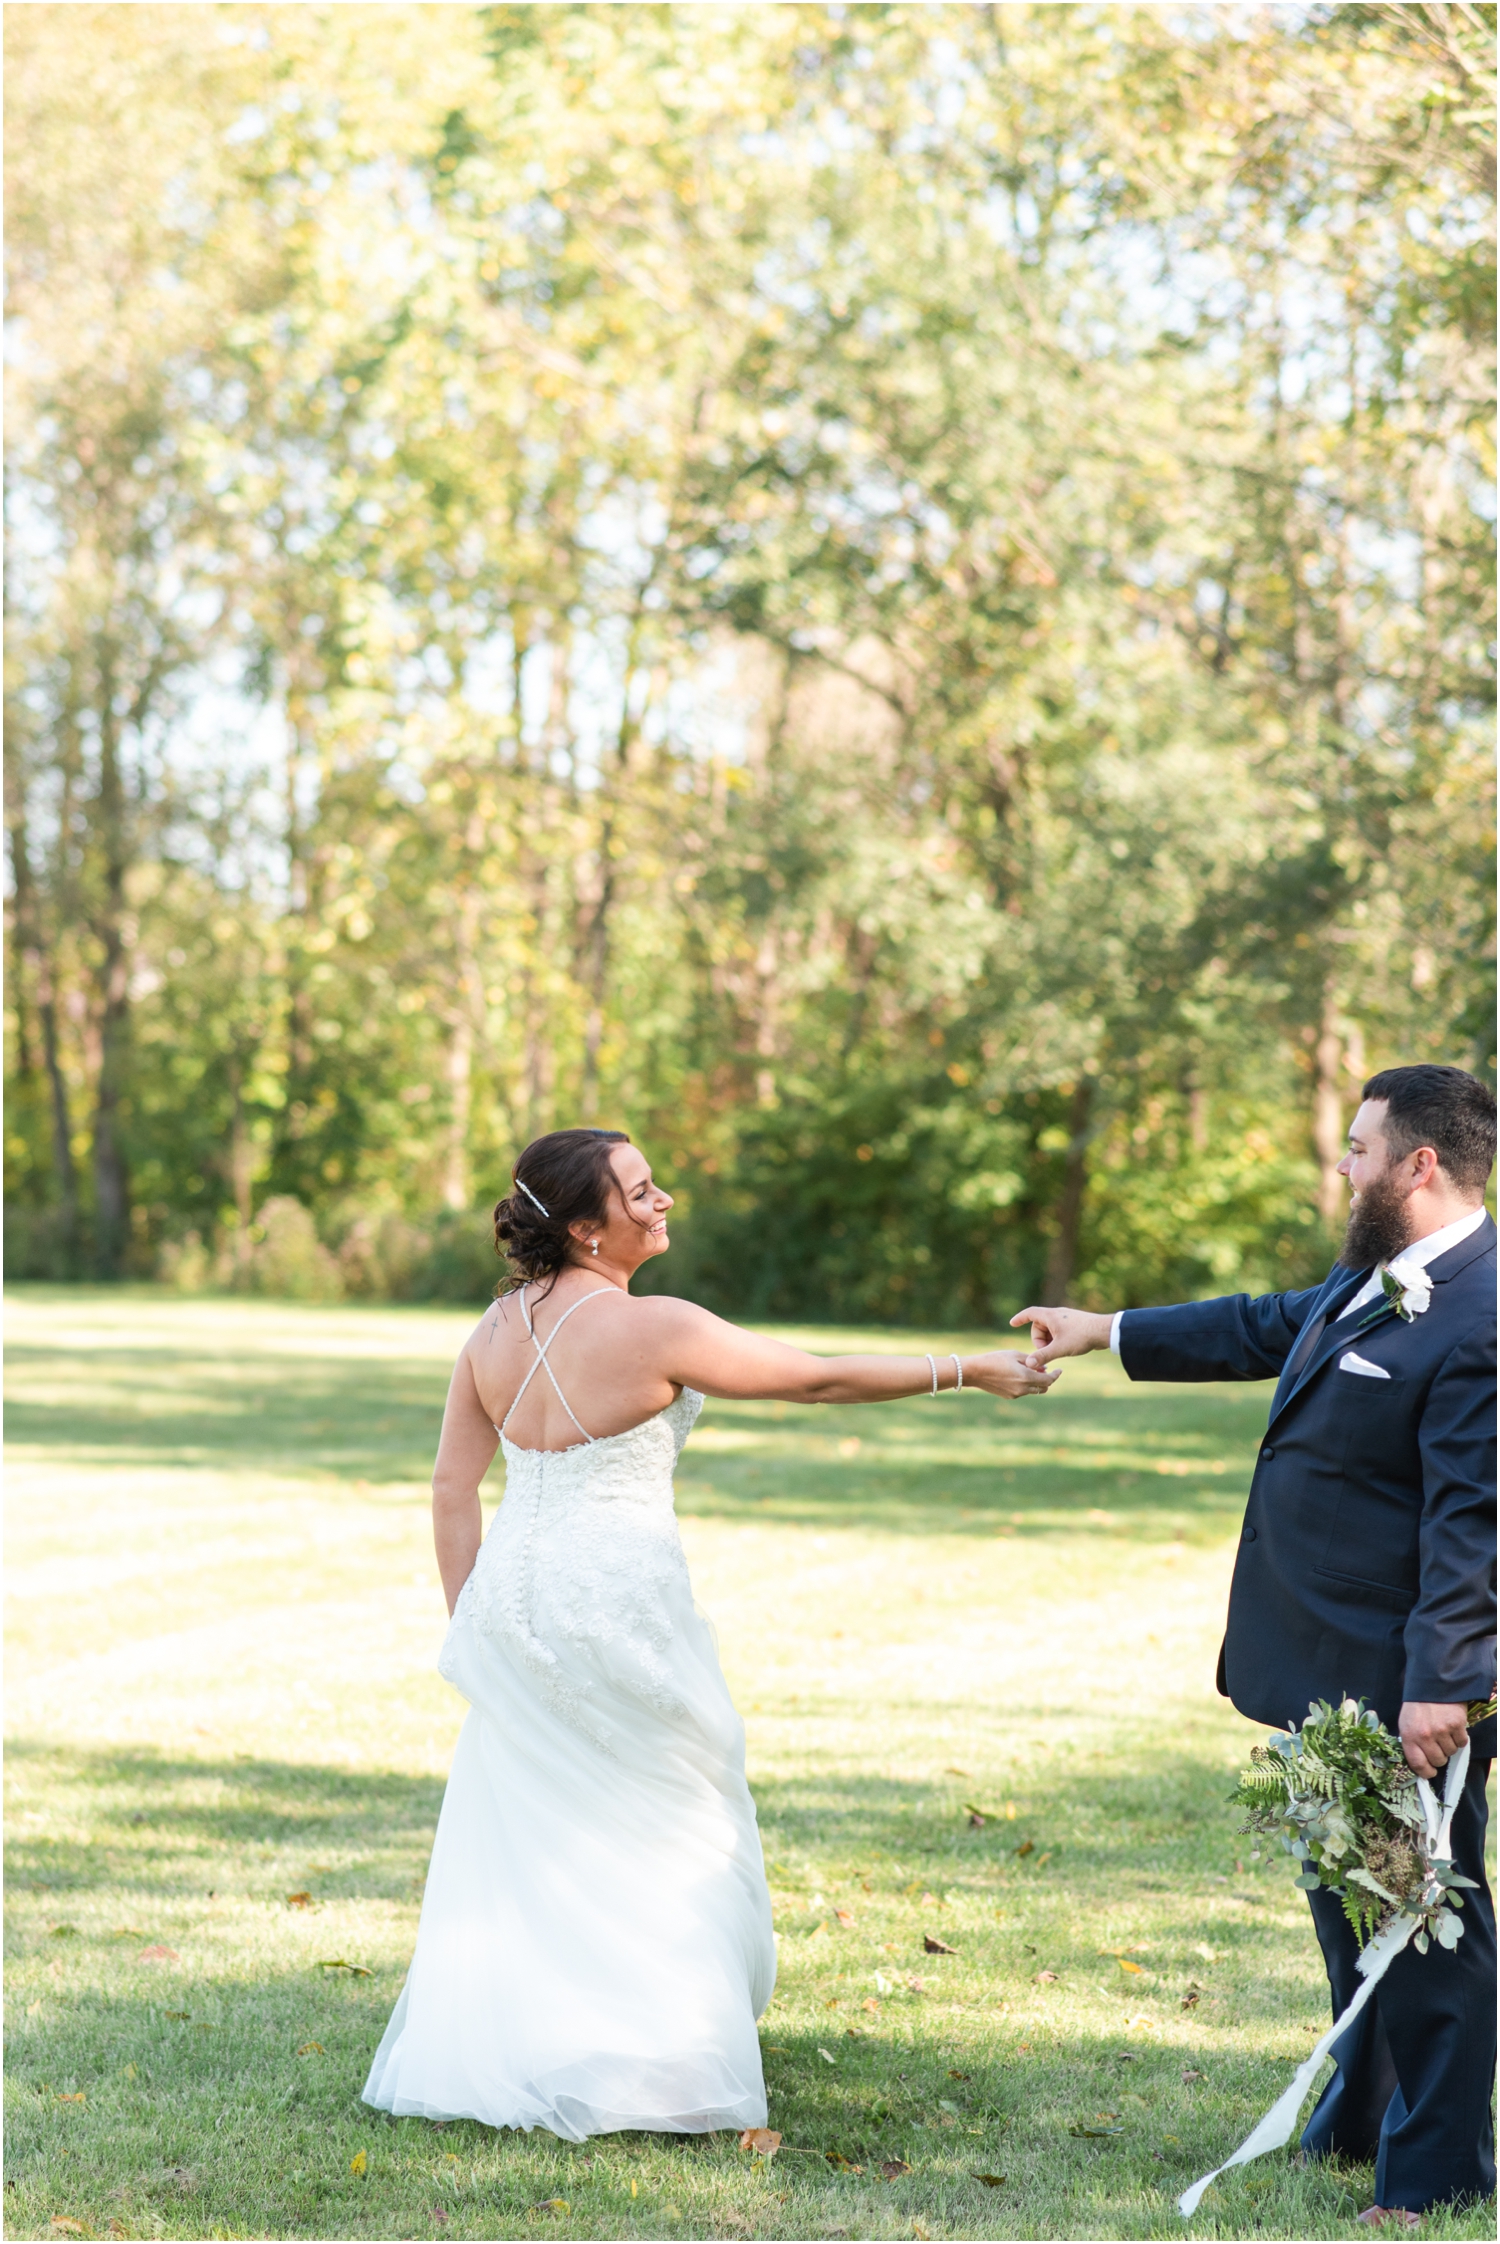 Neutral Outdoor Forest Backyard Wedding Rose Courts Photography Fort Wayne Indiana Wedding Photographer